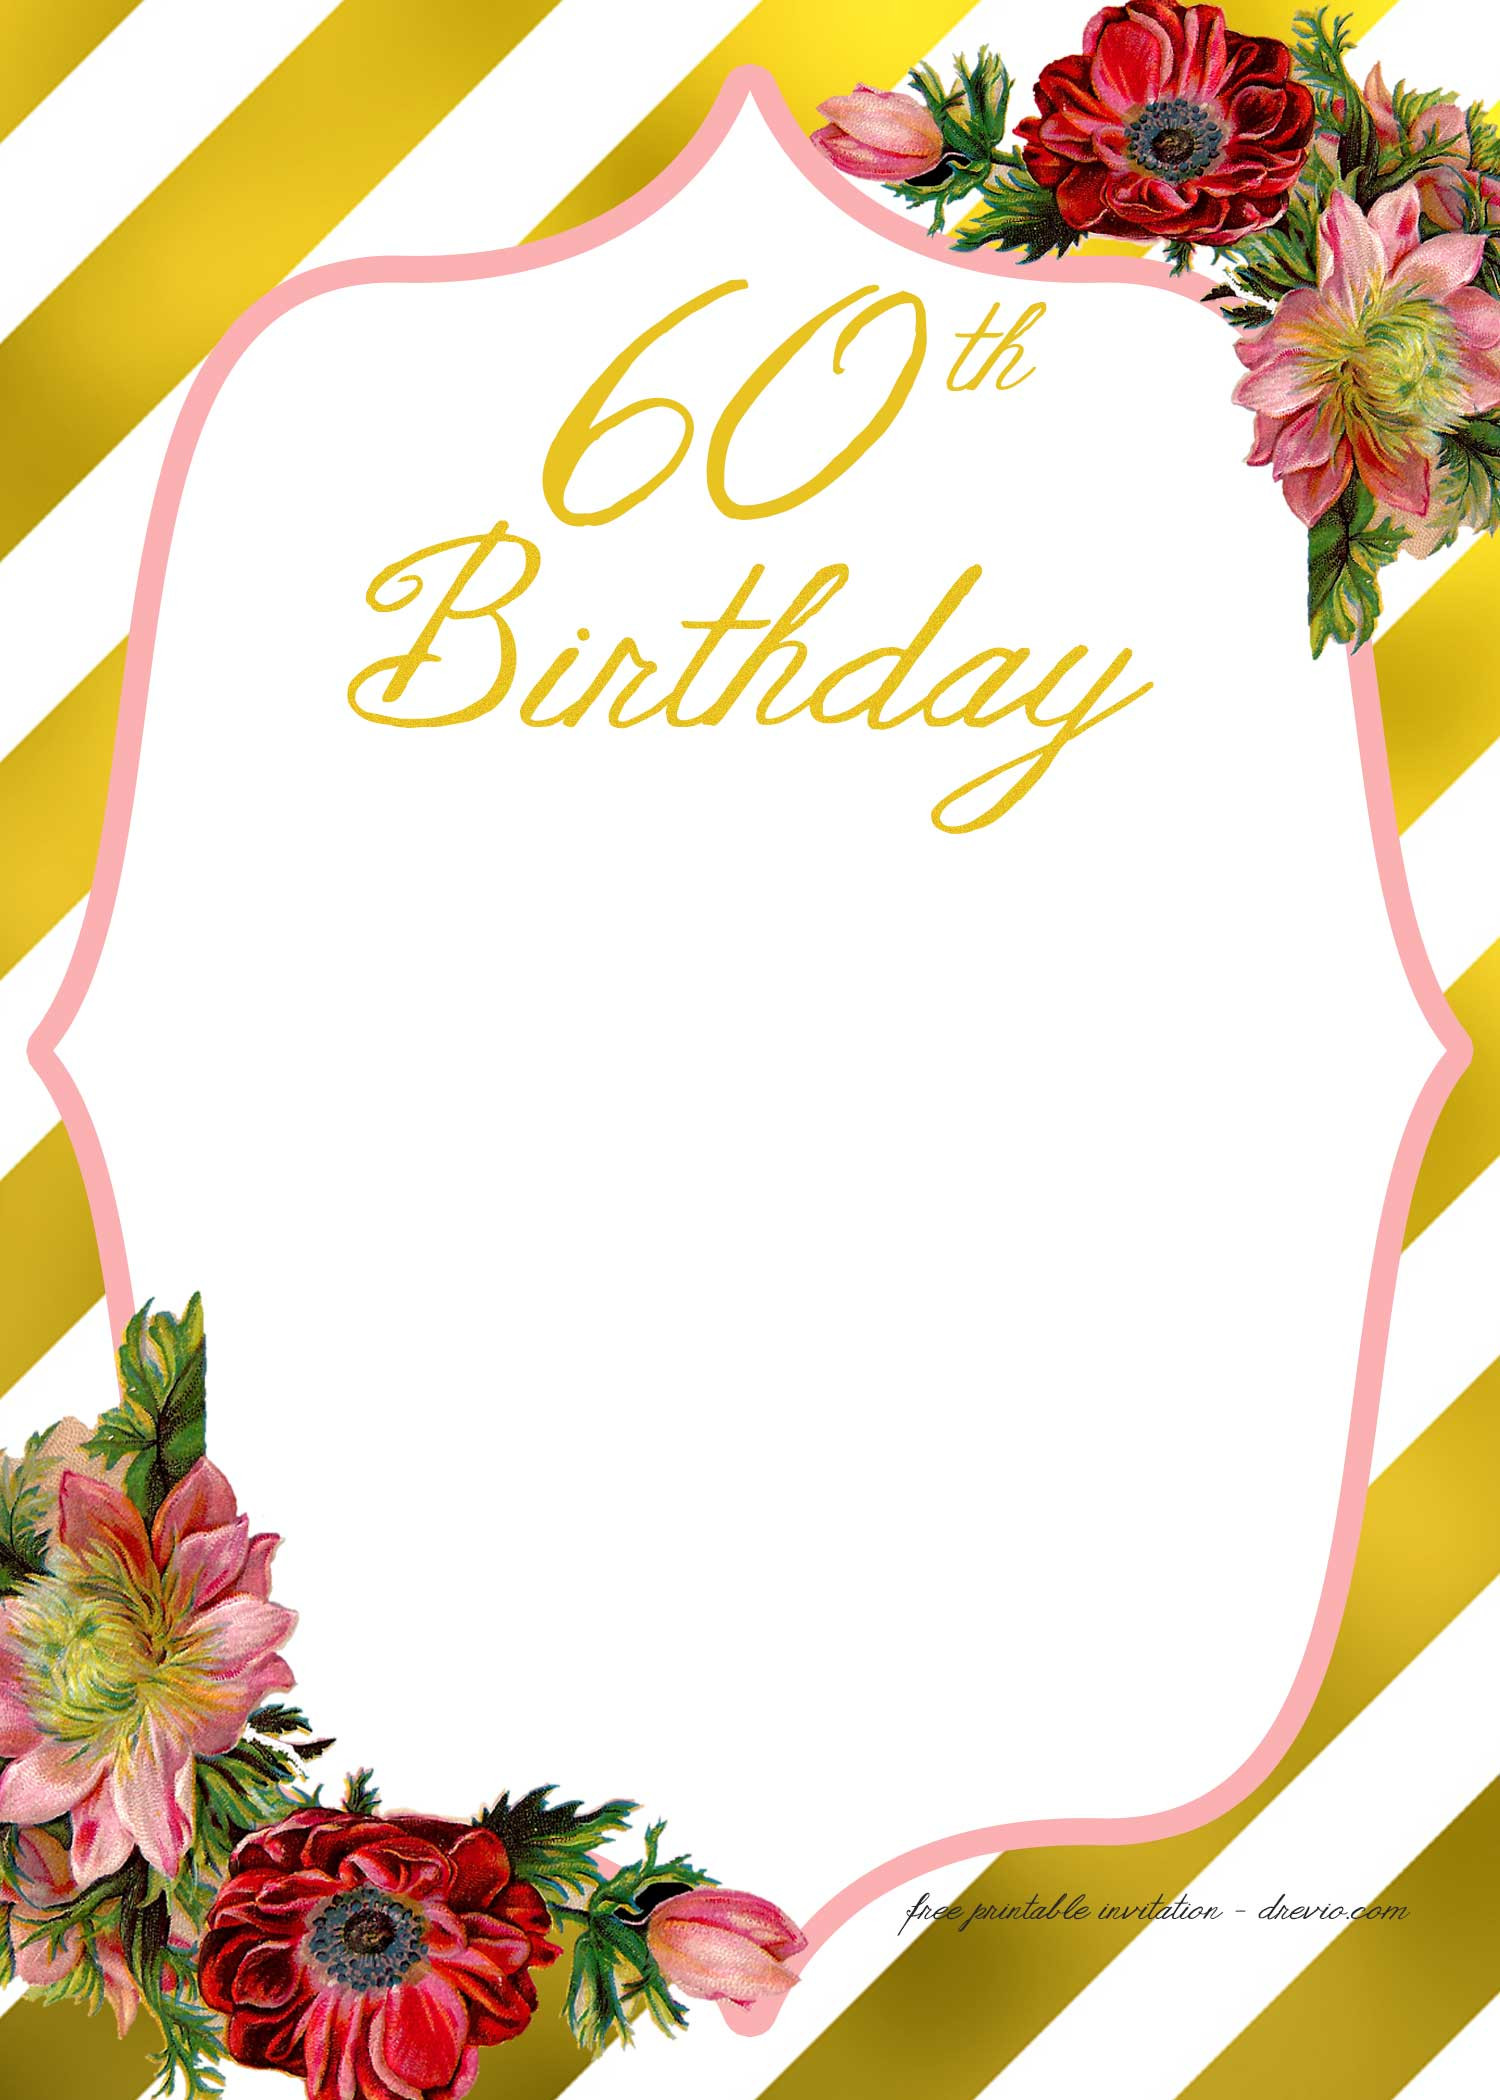 Free Birthday Invitations To Print
 FREE Printable Adult Birthday Invitation Template – FREE